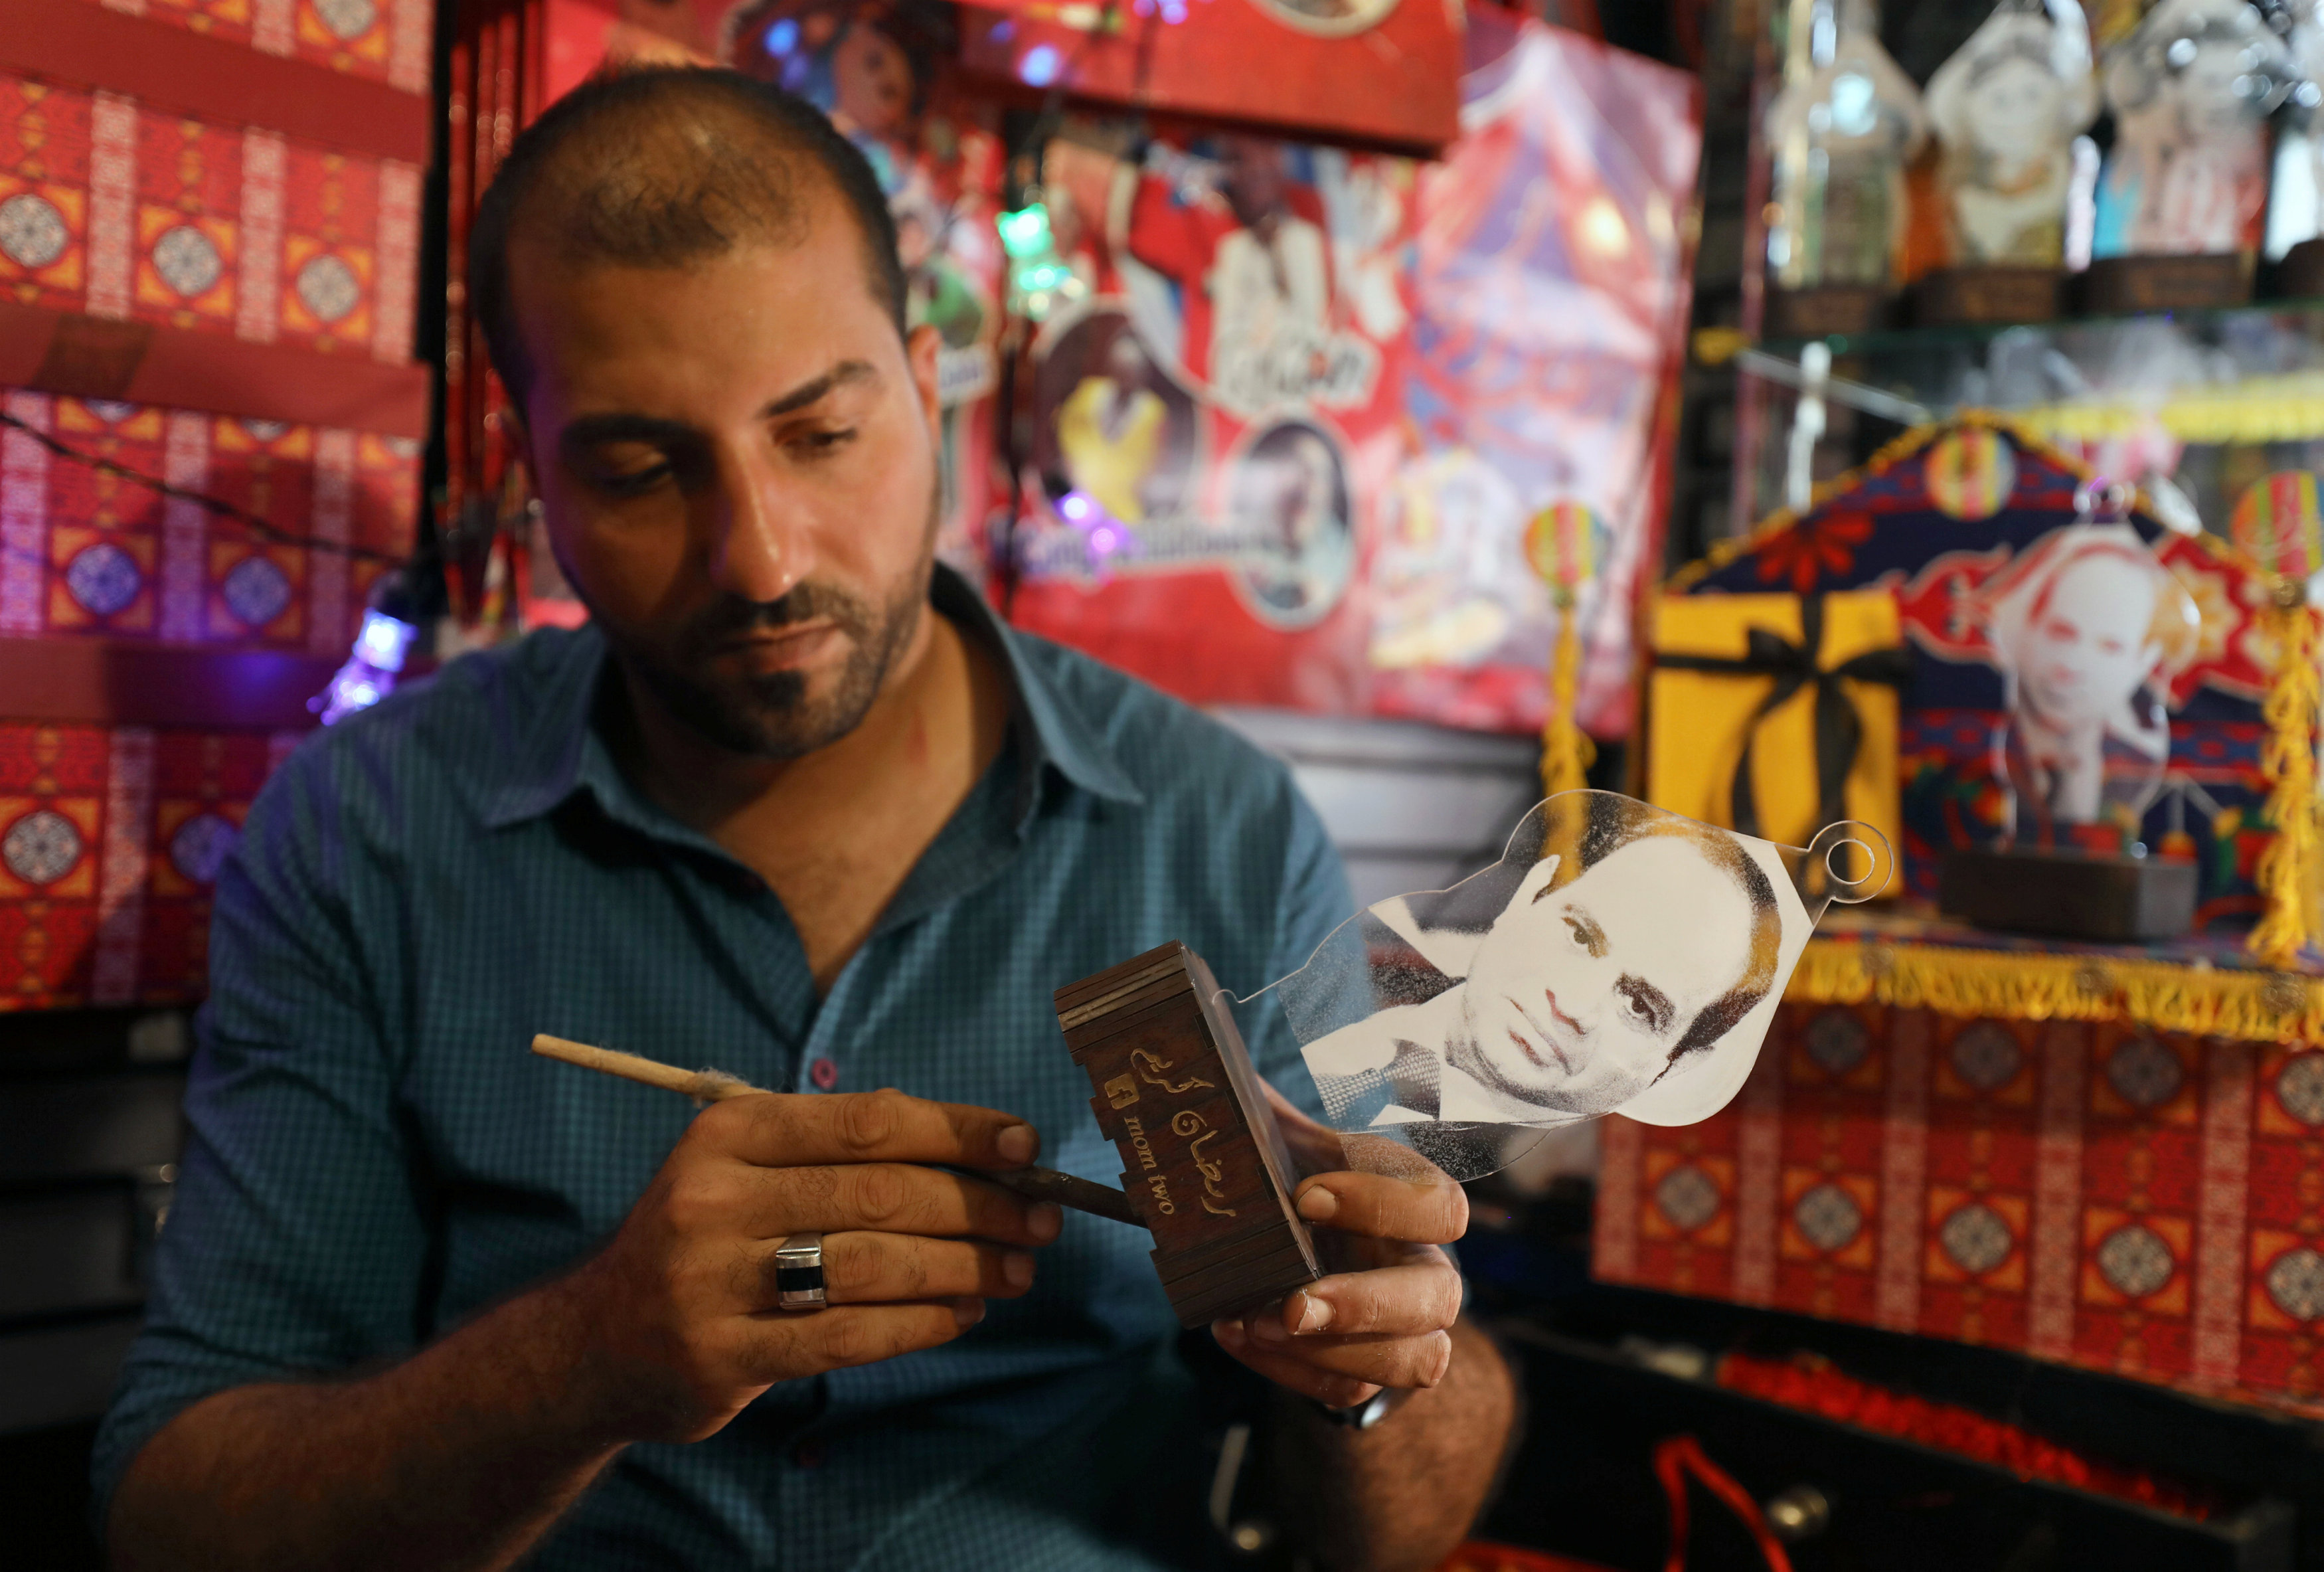 شاب مصرى يصنع فوانيس رمضان بصور المشاهير